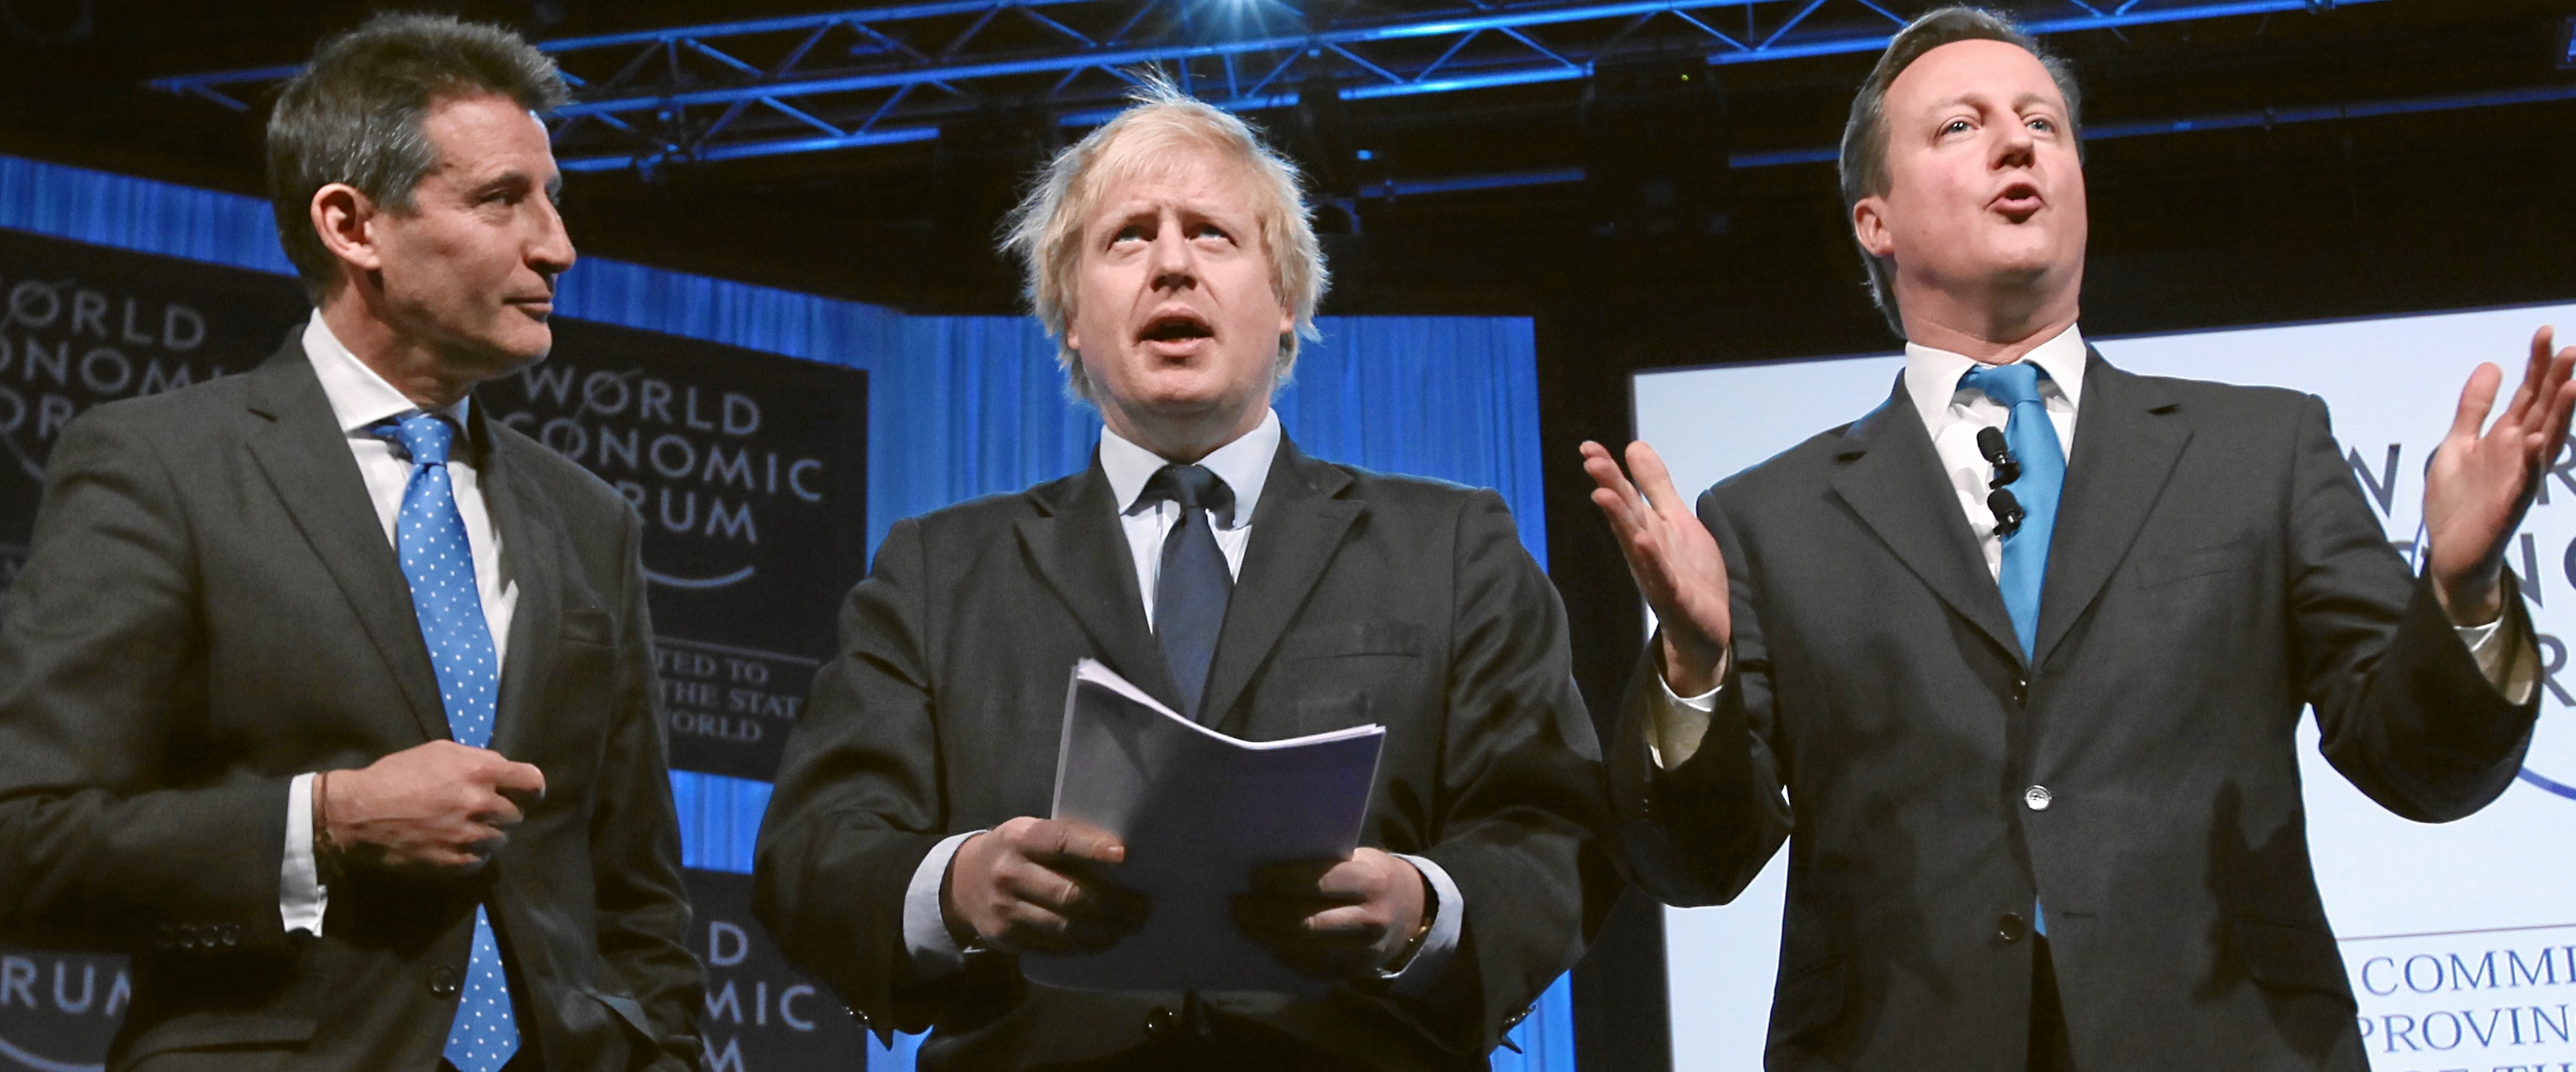 Lord_Coe,_Boris_Johnson,_David_Cameron_-_World_Economic_Forum_Annual_Meeting_2012_cropped